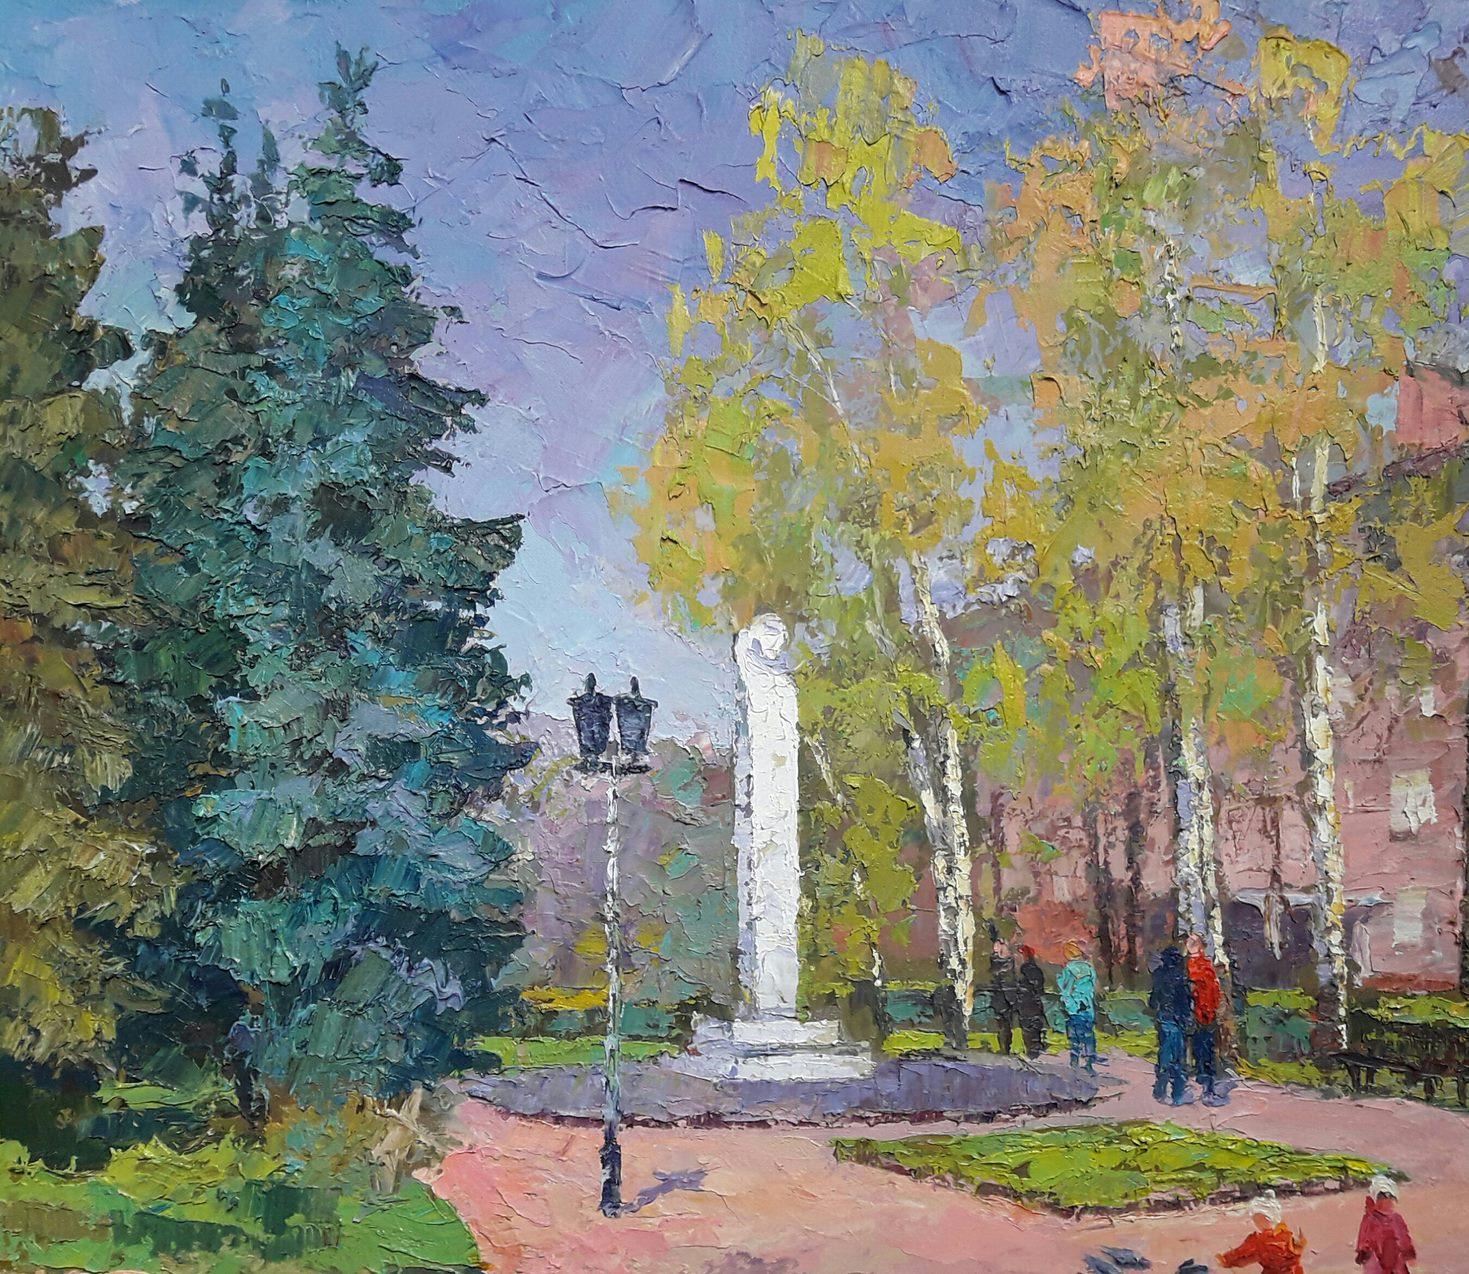 Artist: Boris Serdyuk 
Work: Original oil painting, handmade artwork, one of a kind 
Medium: Oil on Canvas
Style: Impressionism
Year: 2020
Title: Pushkin Boulevard
Size: 27.5